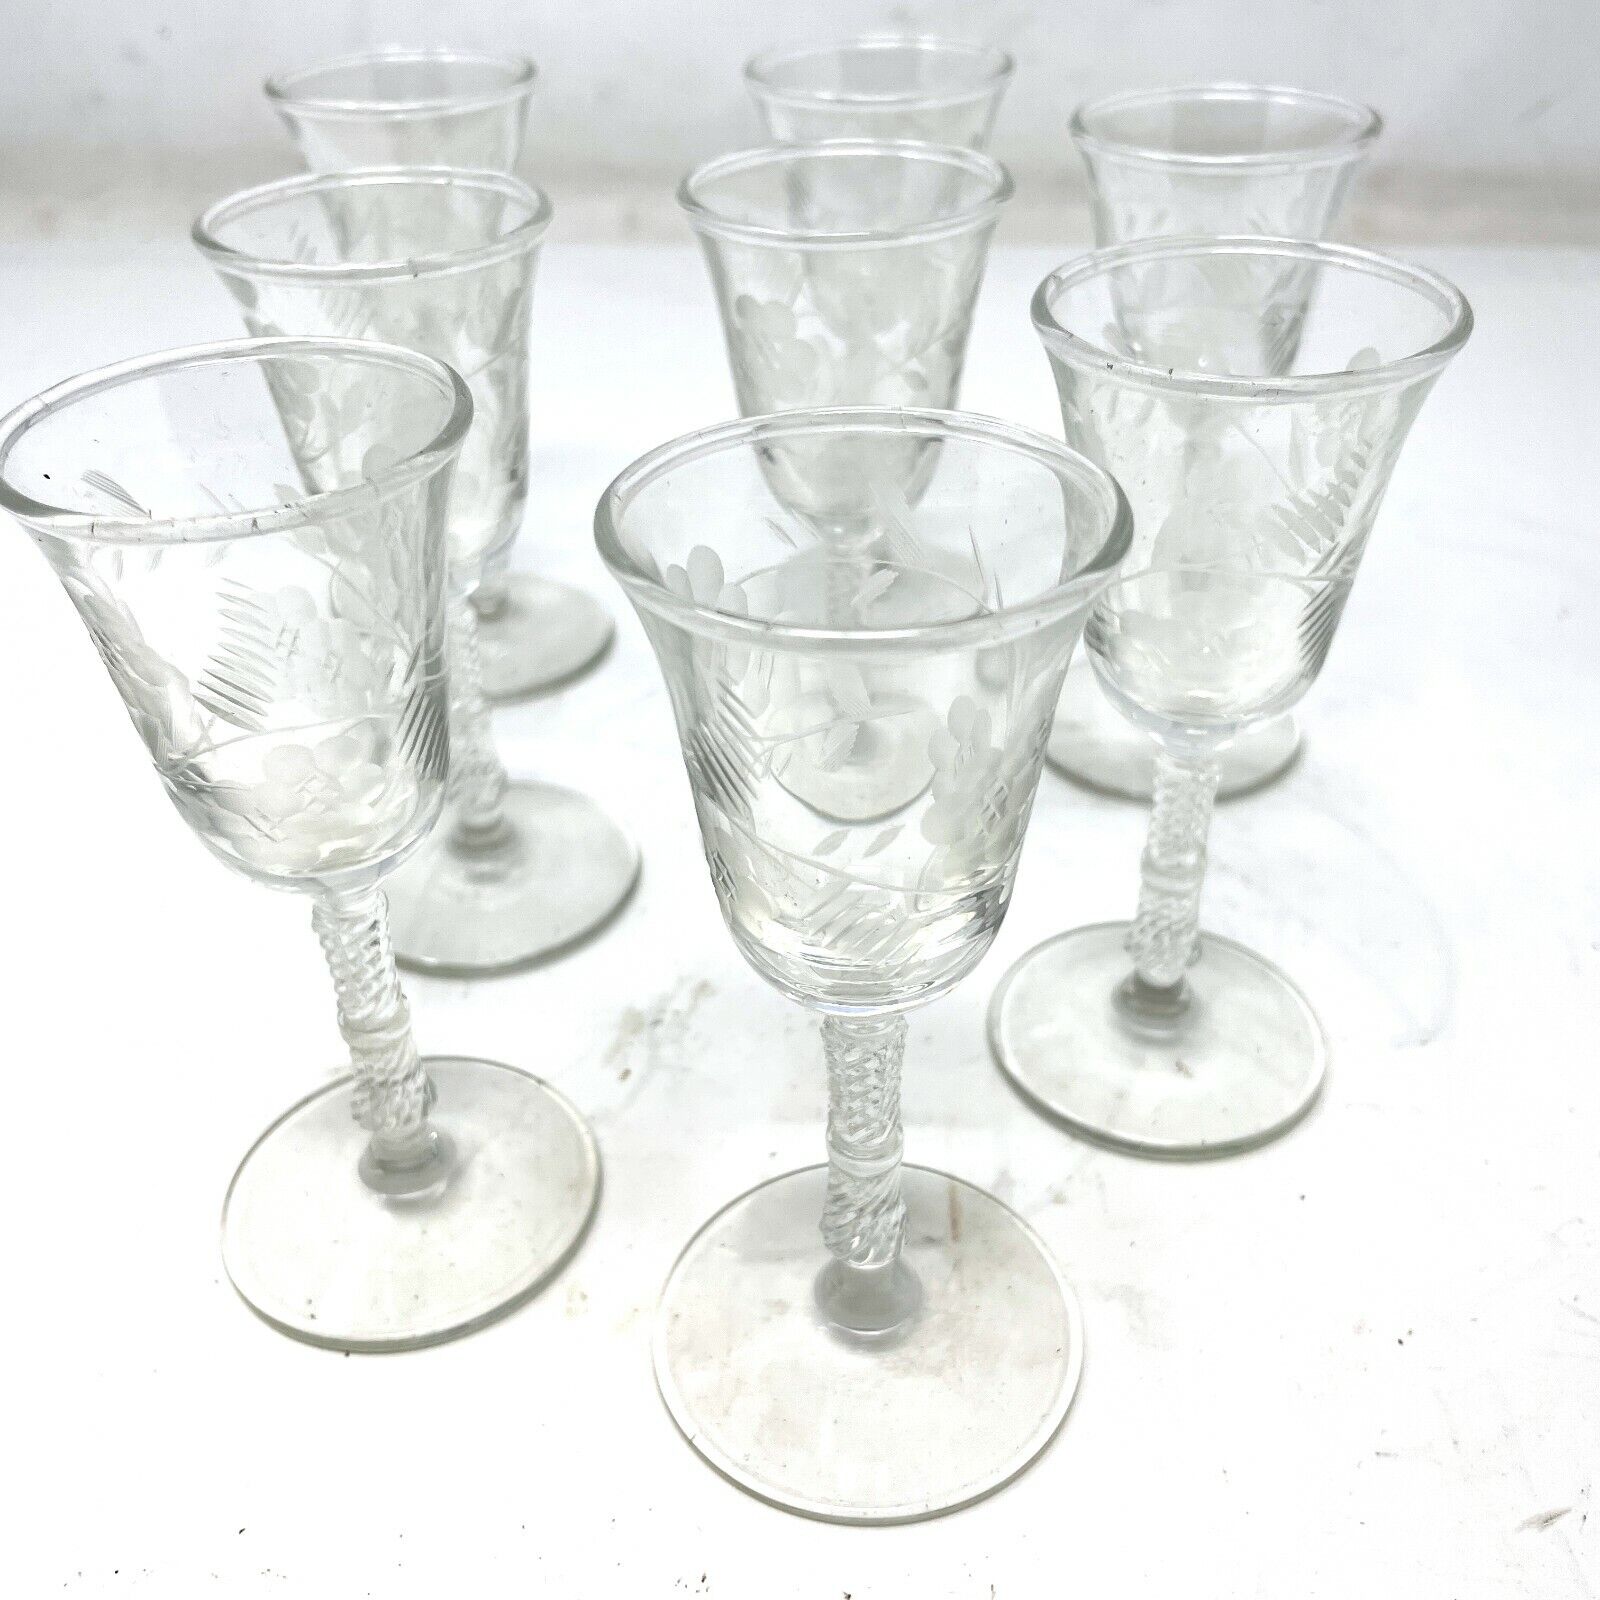 8 pcs Vintage Crystal Cordial Glasses, Floral Etched Set, 4.5 in High, 2 in Wide